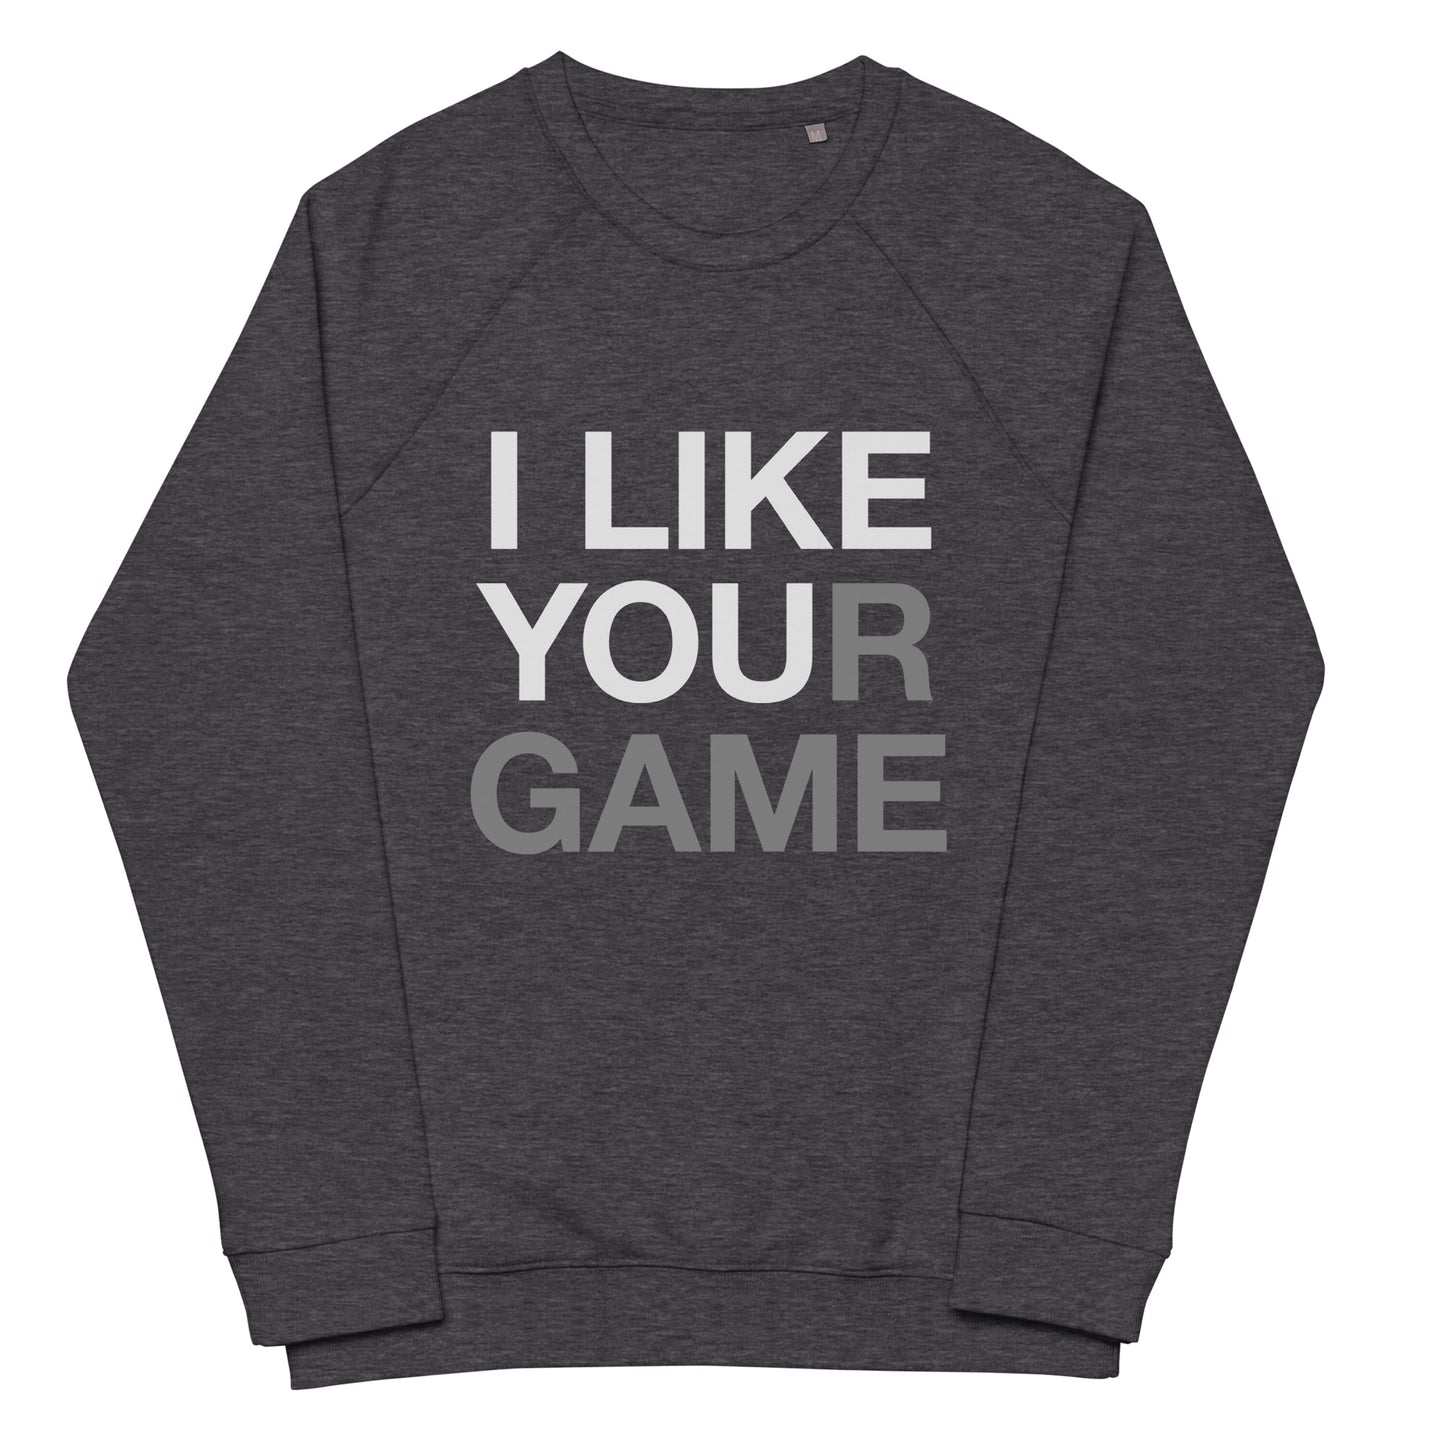 I LIKE YOU(R) Game Unisex organic raglan sweatshirt